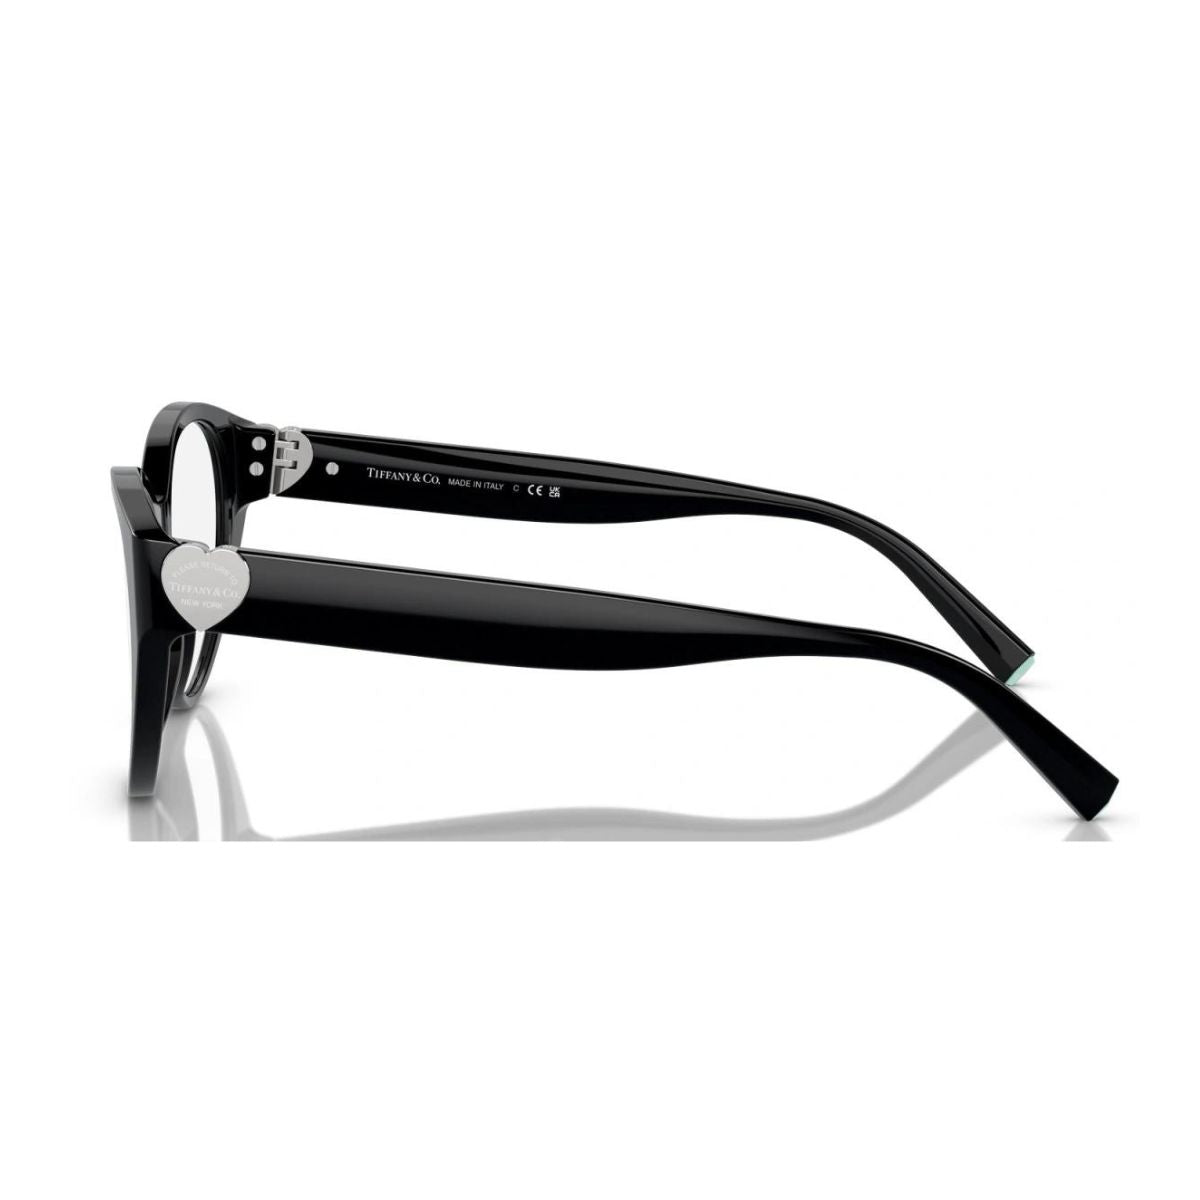 "Tiffany & C0 2244 8001 Spectacle Eyewear Frame For Women's At Optorium"